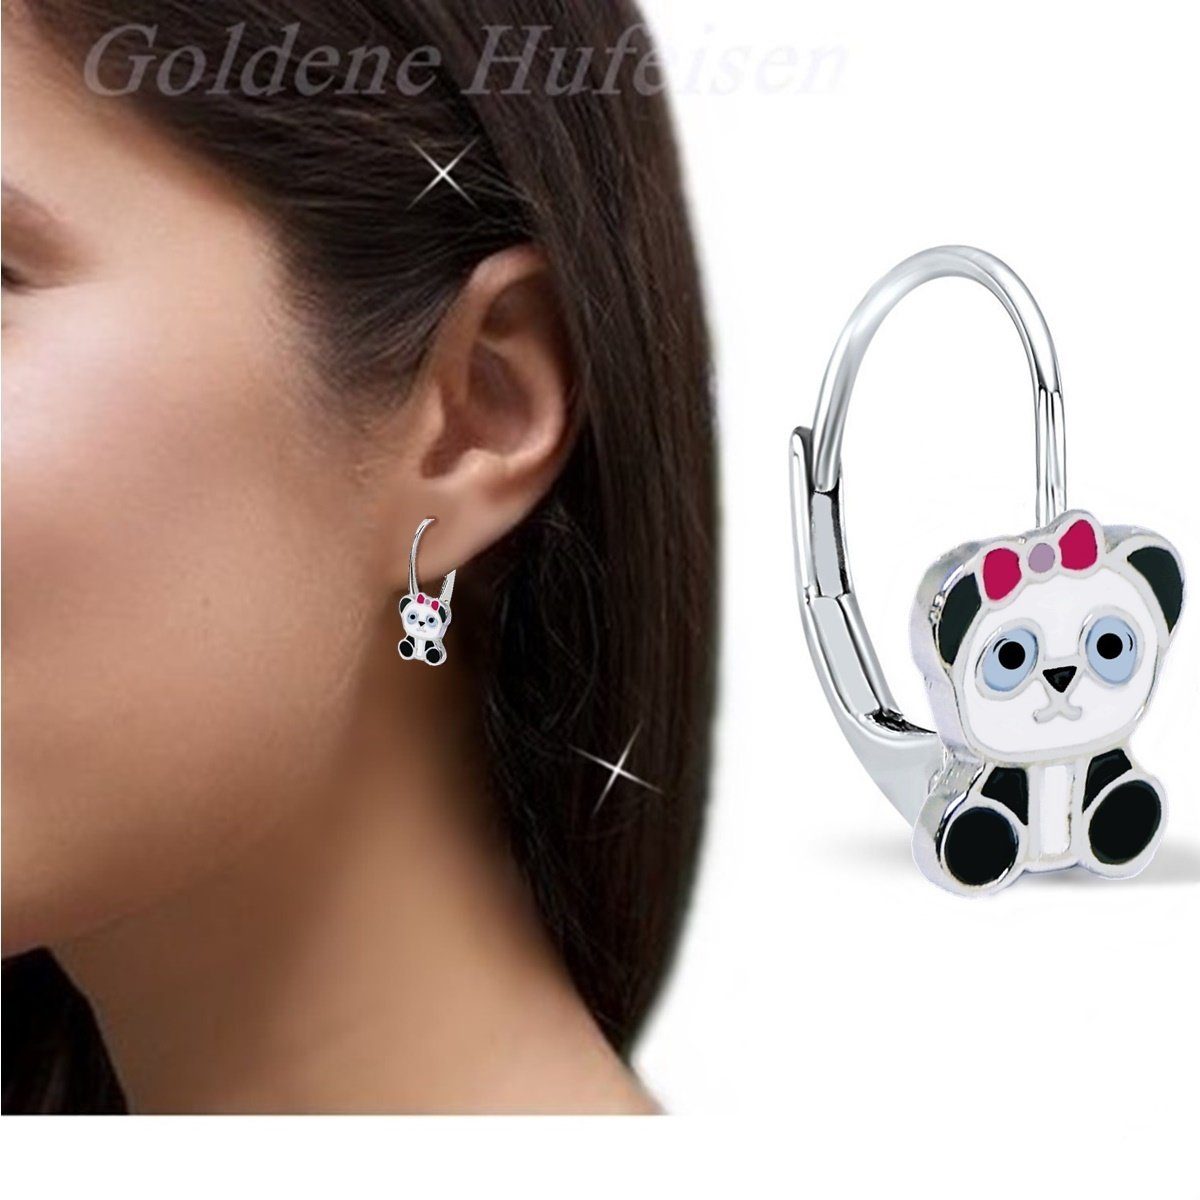 Ohrringe Mädchen Paar Kinderschmuck Brisur Ohrhänger Silber, Goldene Hufeisen Panda 925 Kinder